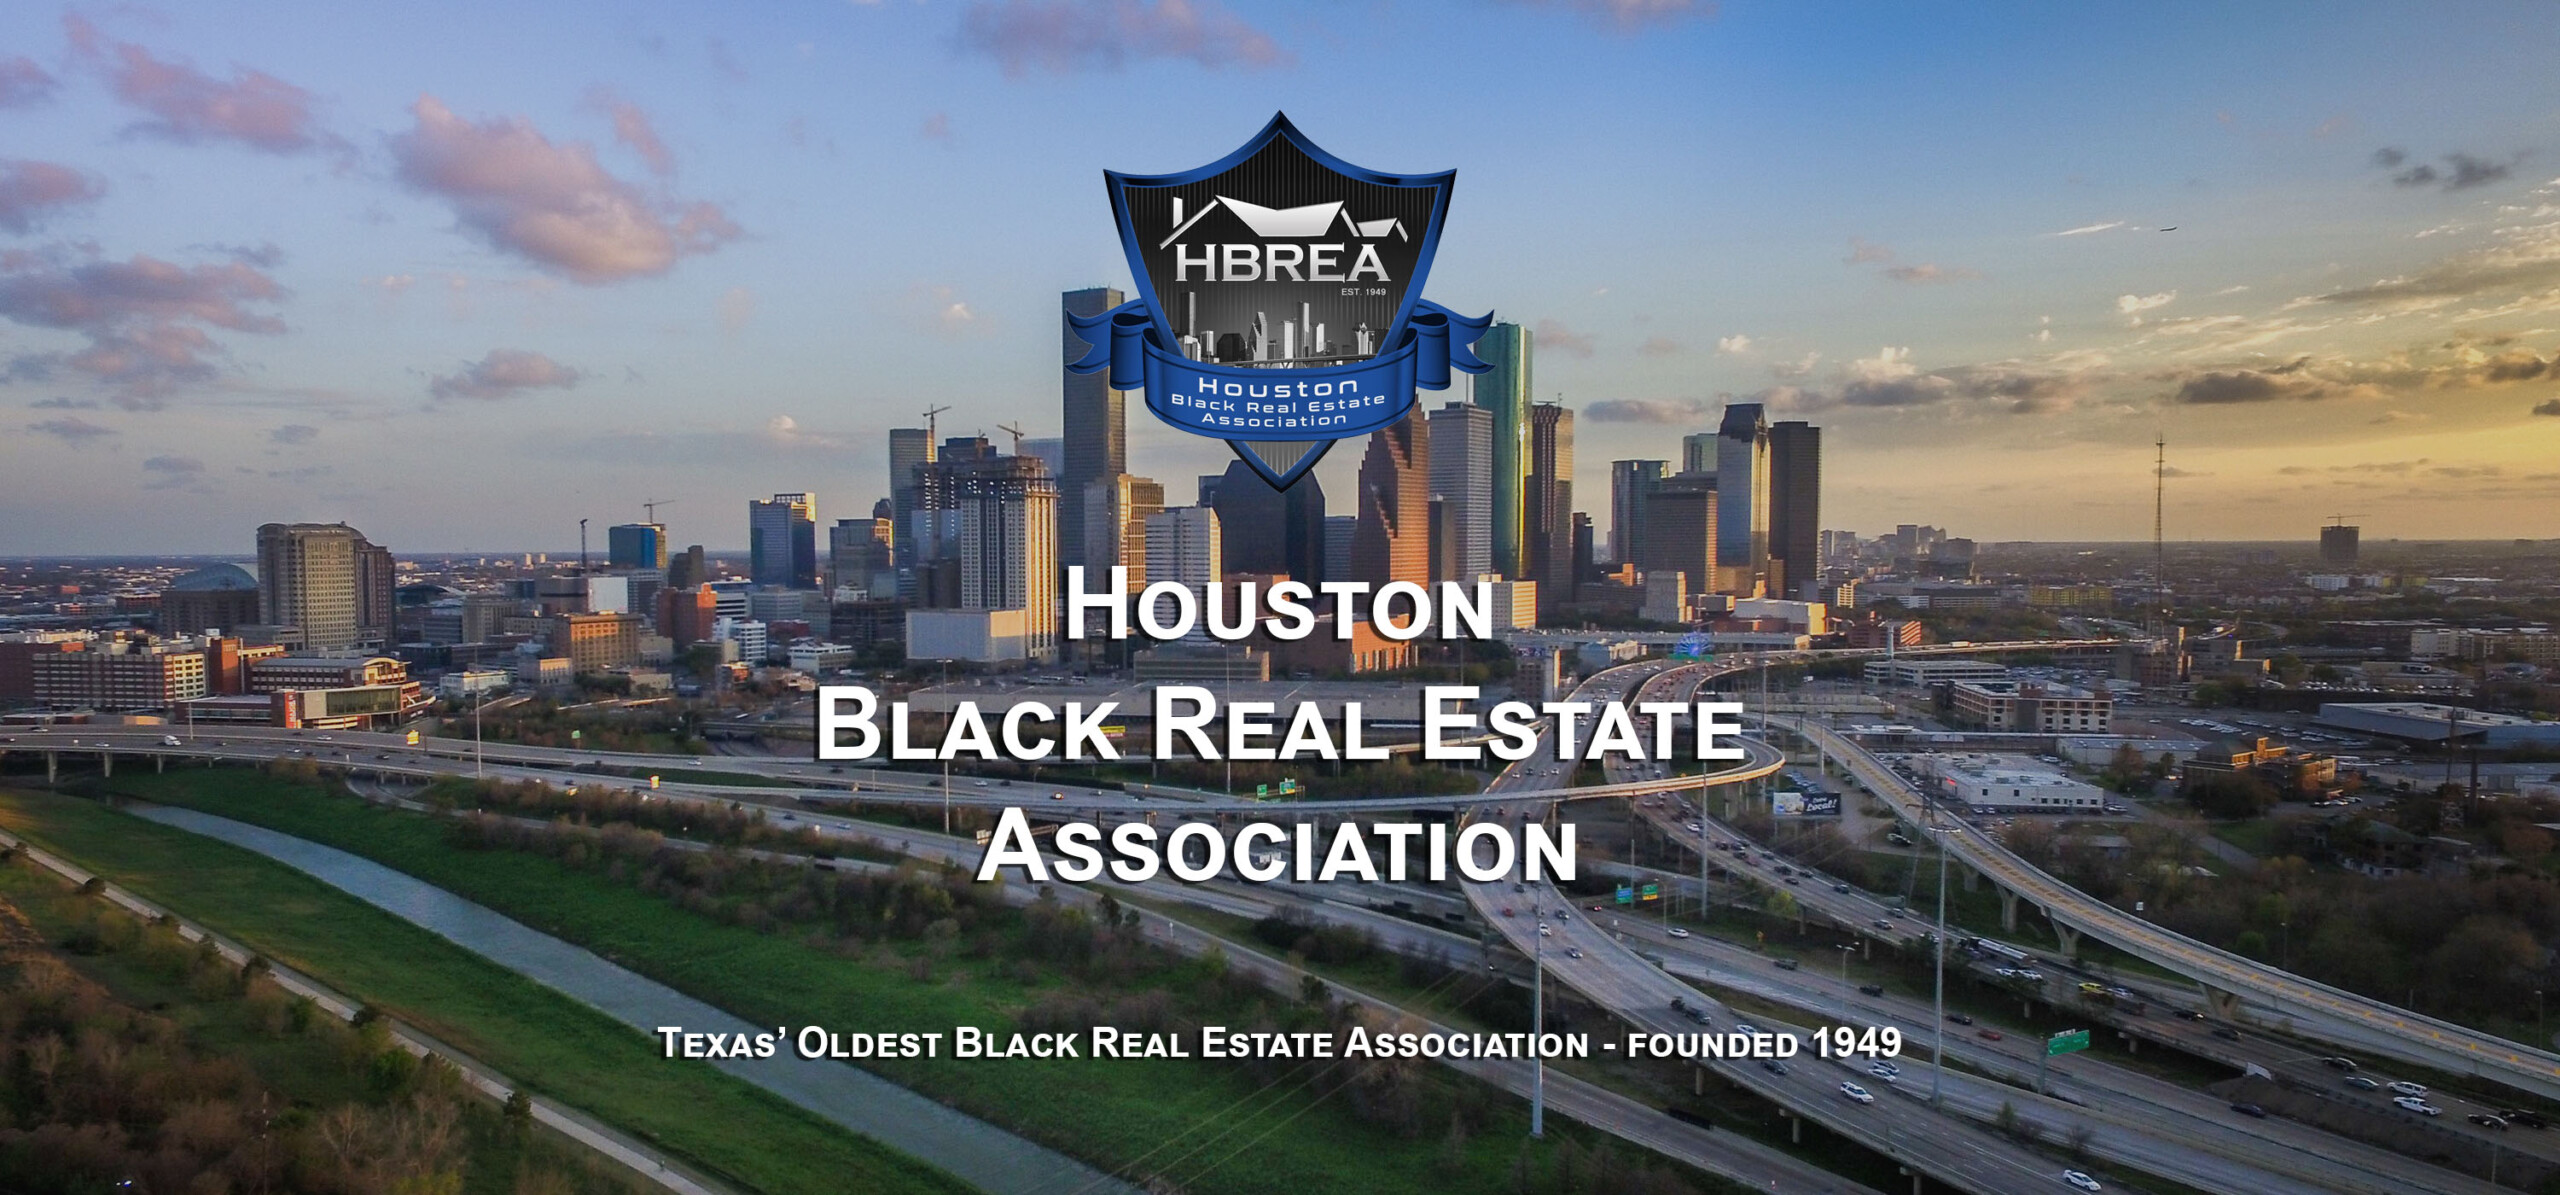 HBREA - Houston Black Real Estate Association